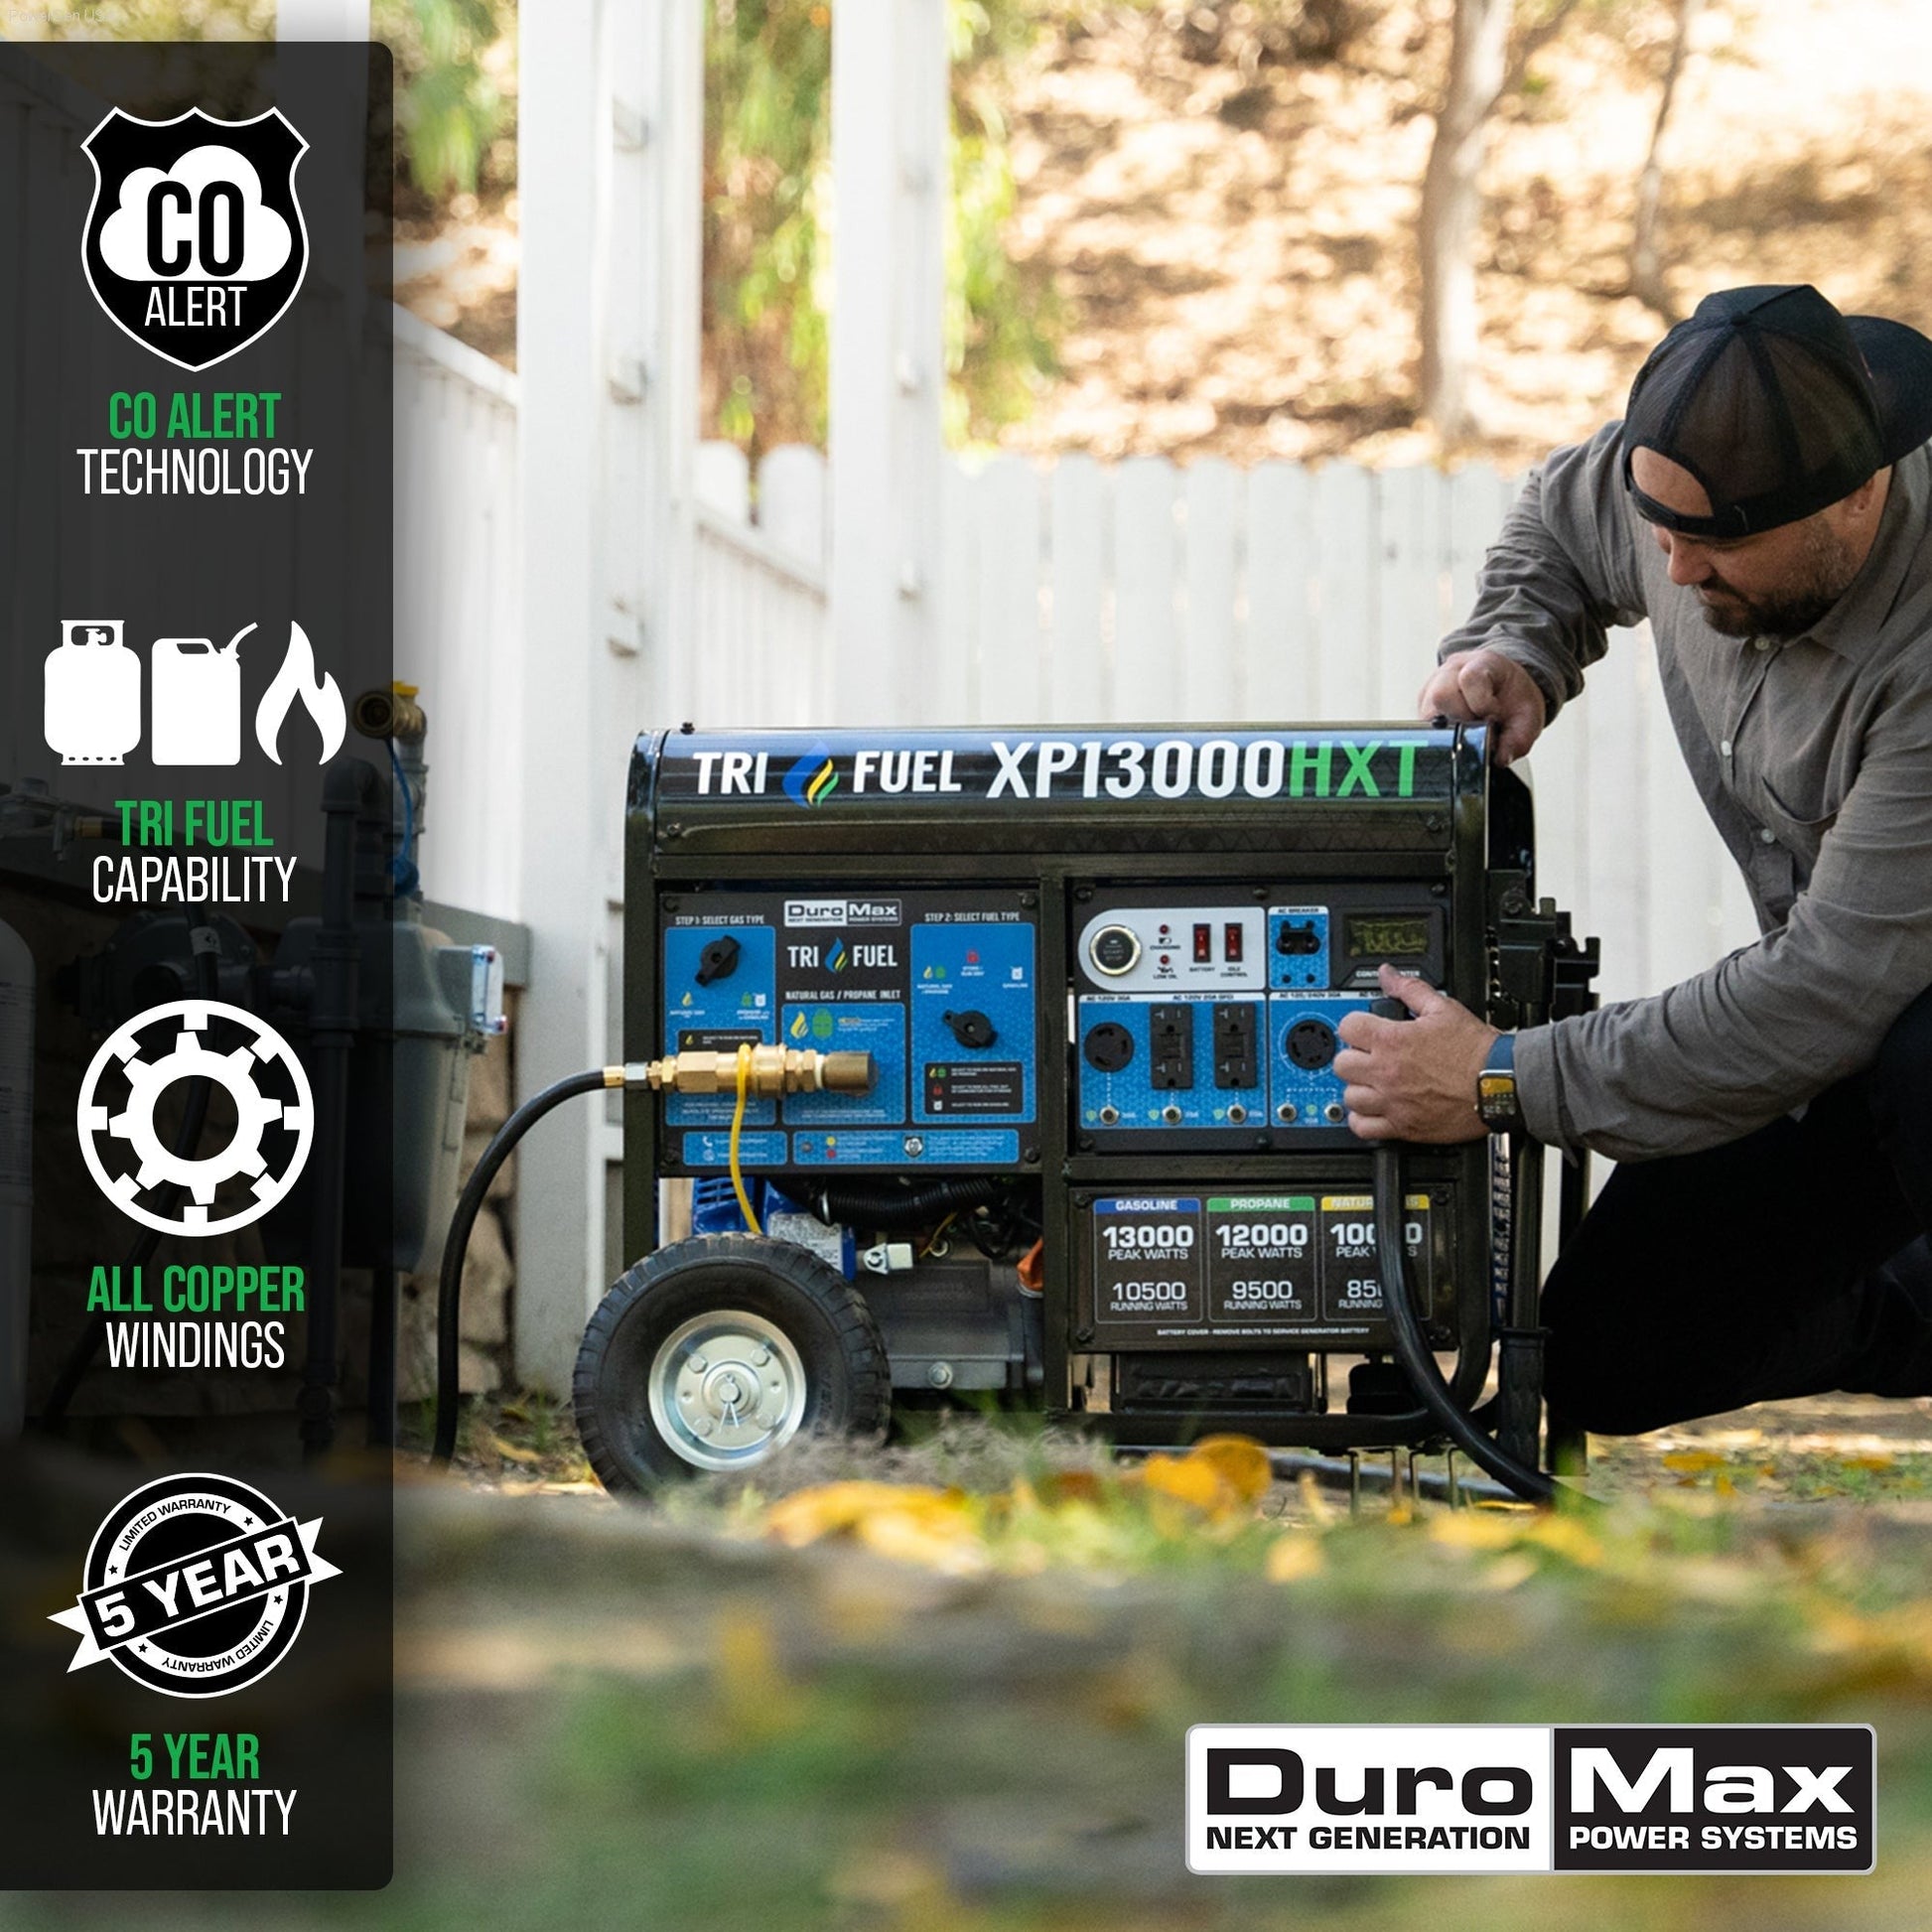 Dual Fuel Hybrid - DuroMax XP13000HXT 13,000 Watt Tri Fuel Portable Home Power Backup HXT Generator W/ CO Alert